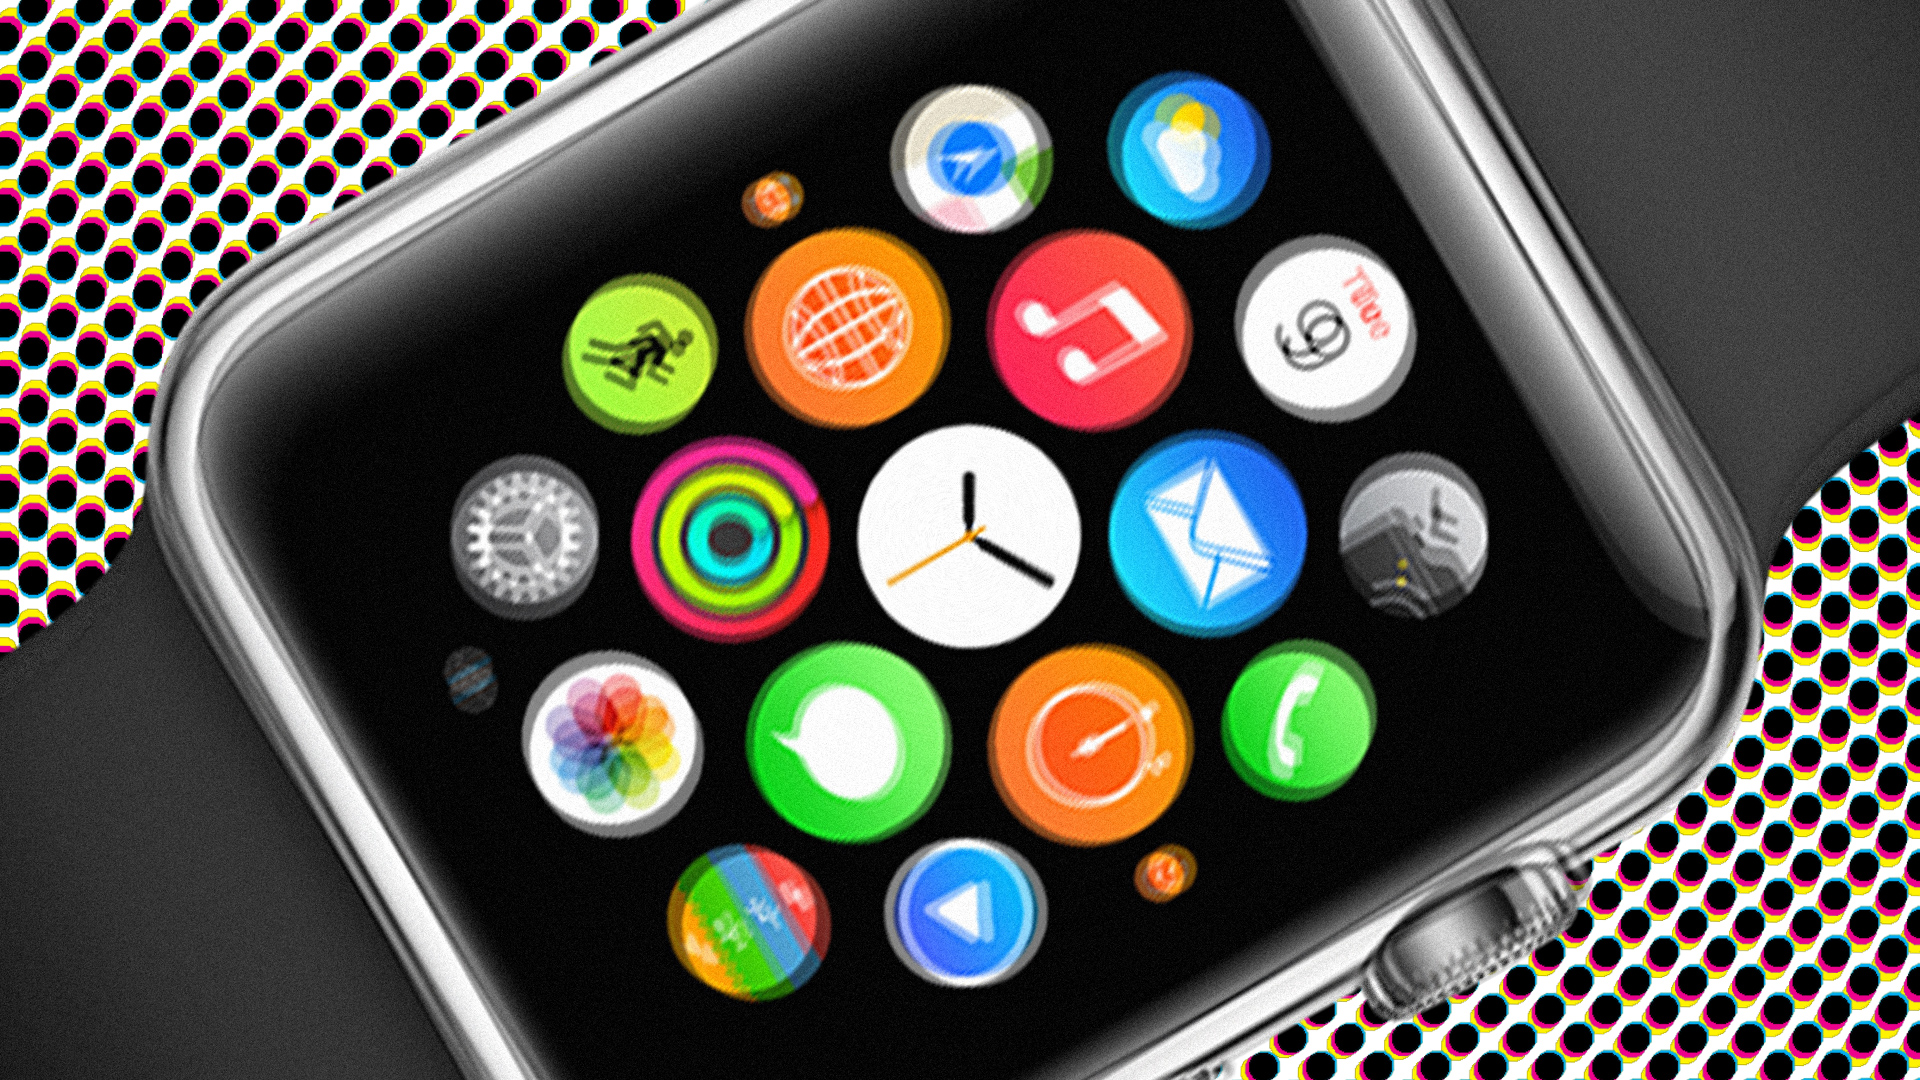 apple watch wallpaper hd,gadget,smartphone,technology,electronic device,communication device